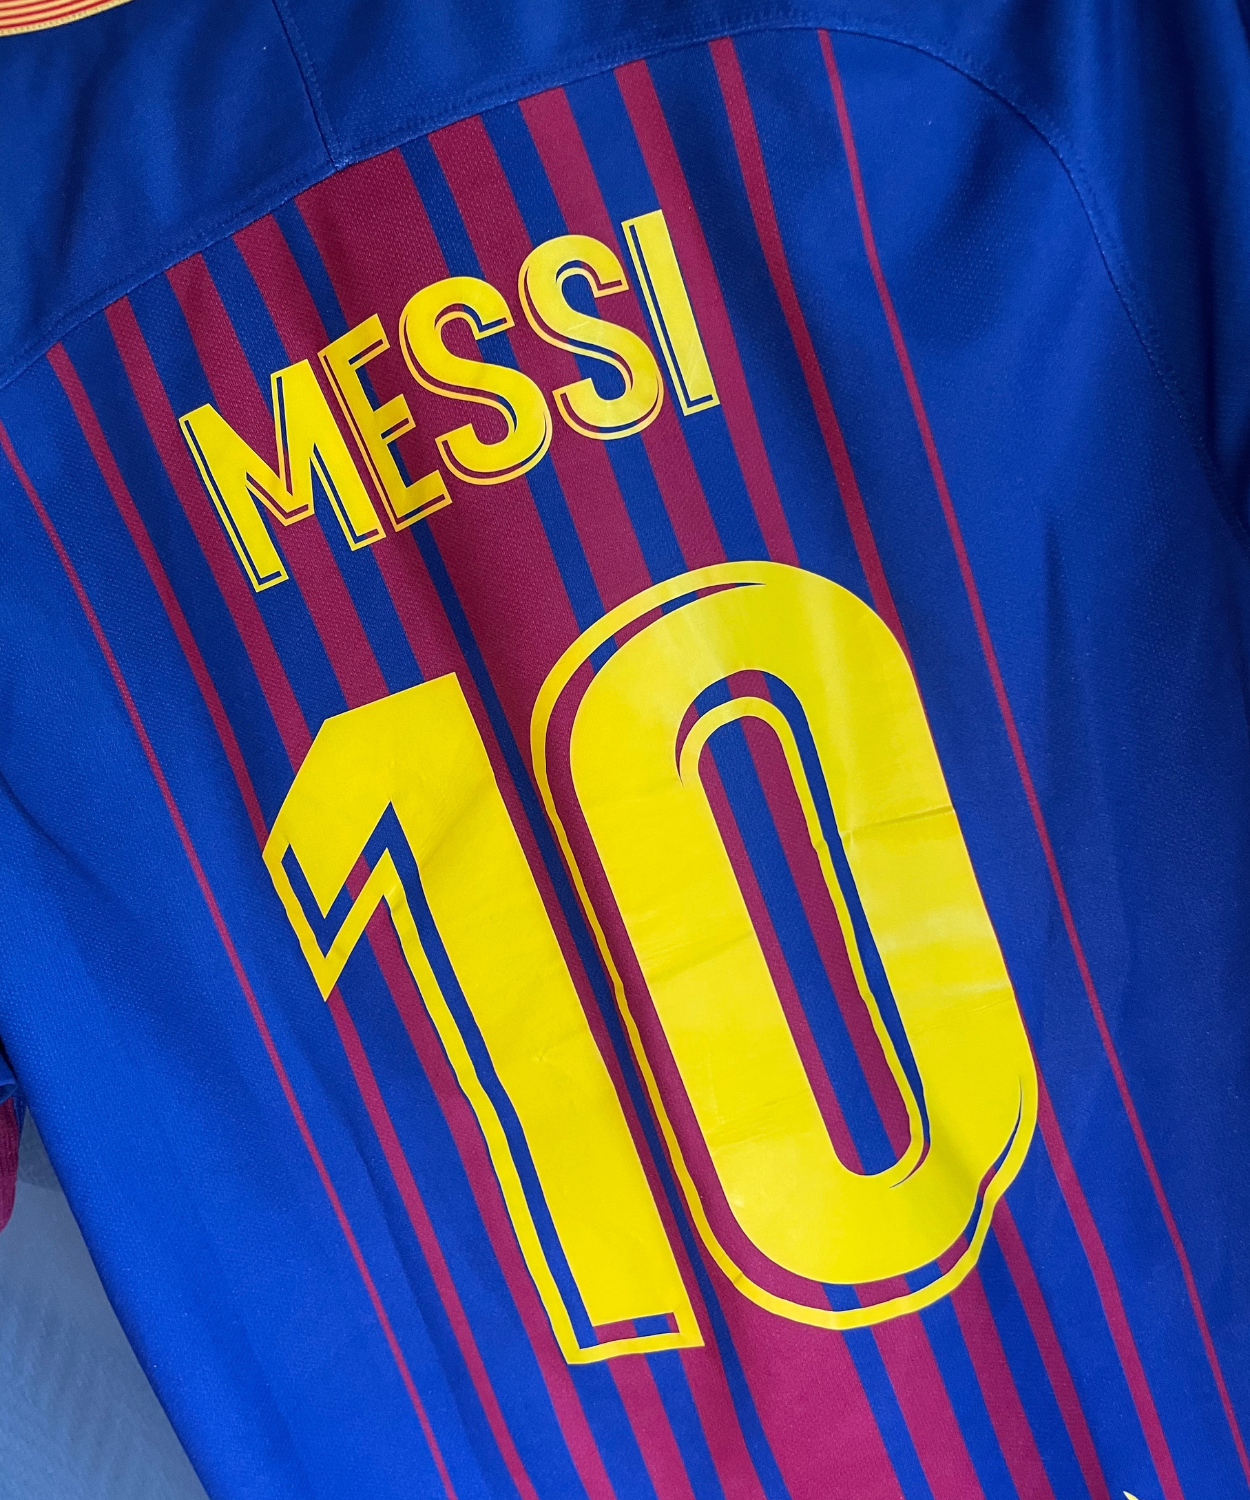 FC Barcelona 2017/18 Messi Home Kit (S)